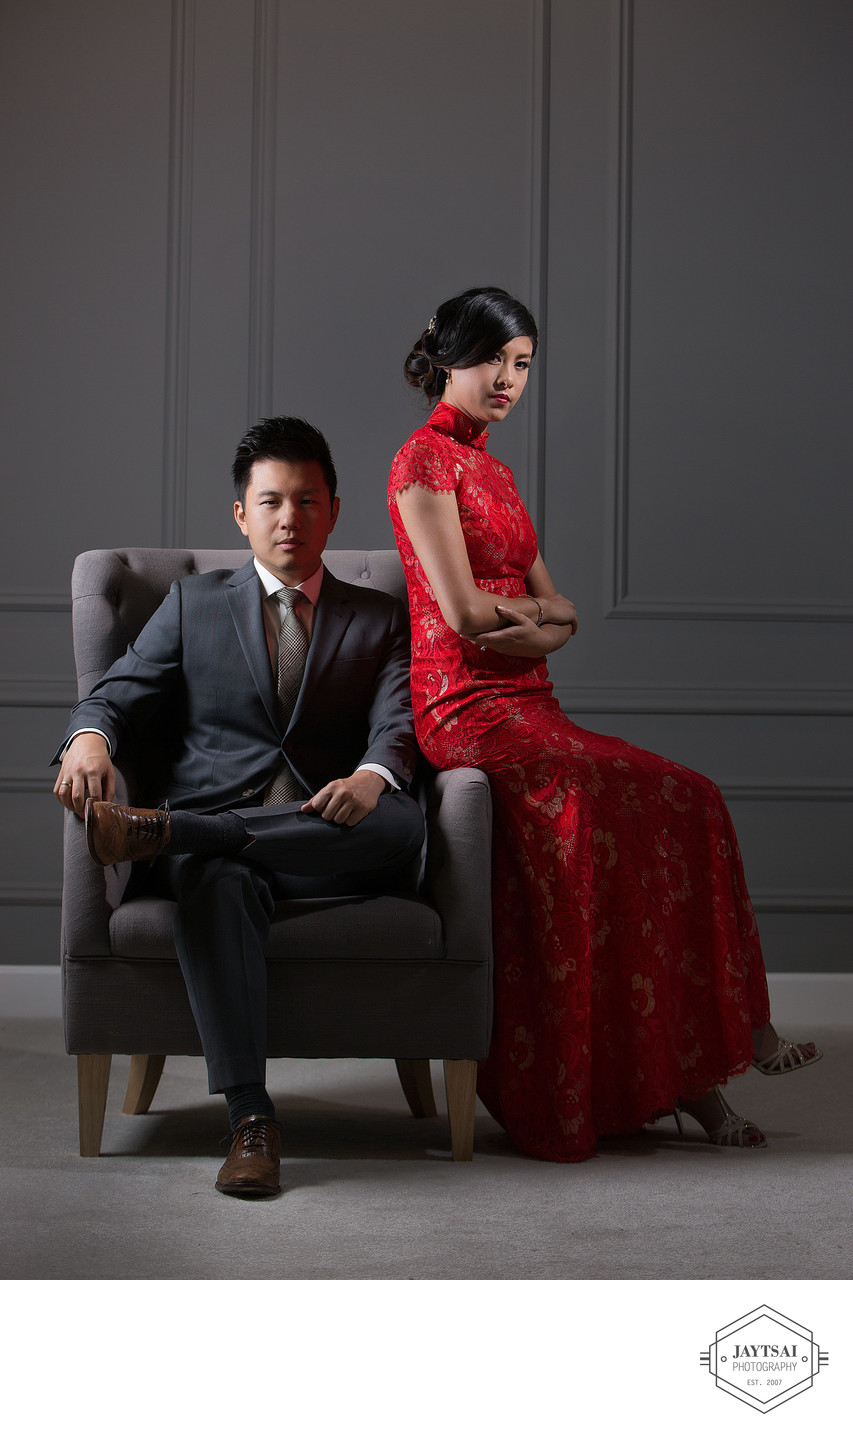 Fashion Studio Wedding Portrait - Bride and Groom